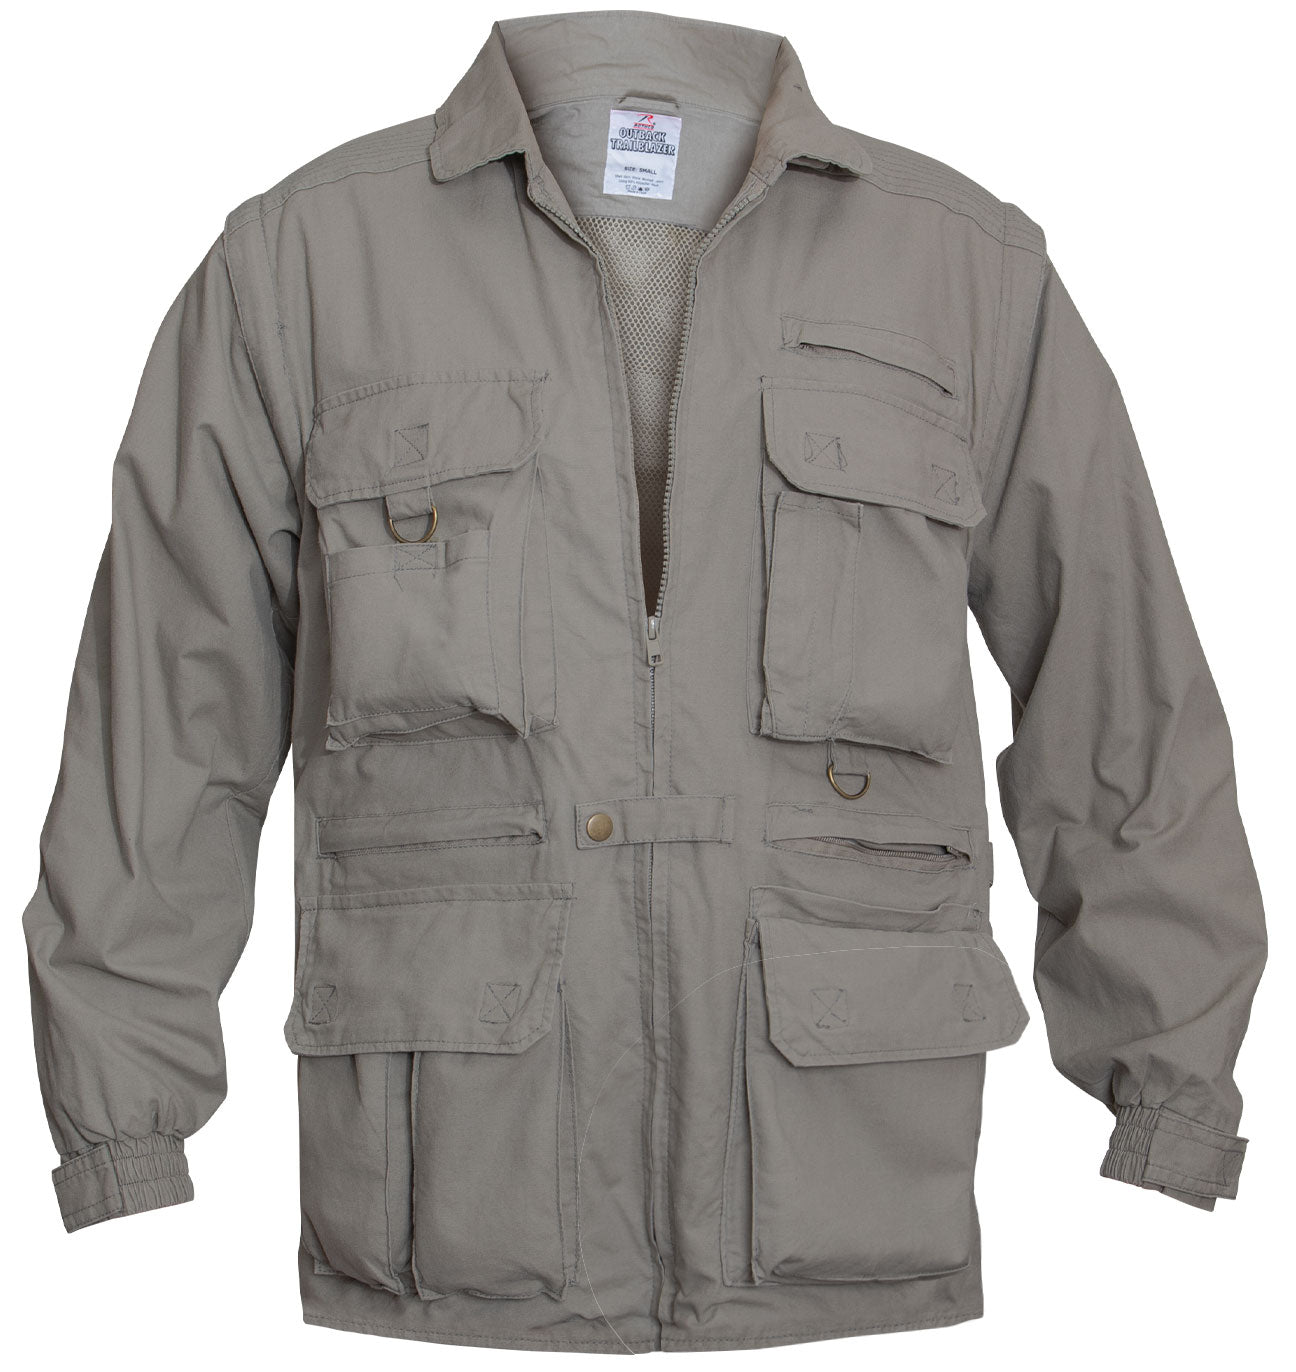 Khaki Safari Outback Convertible Vest Jacket - Fishing Vest w/ Zip